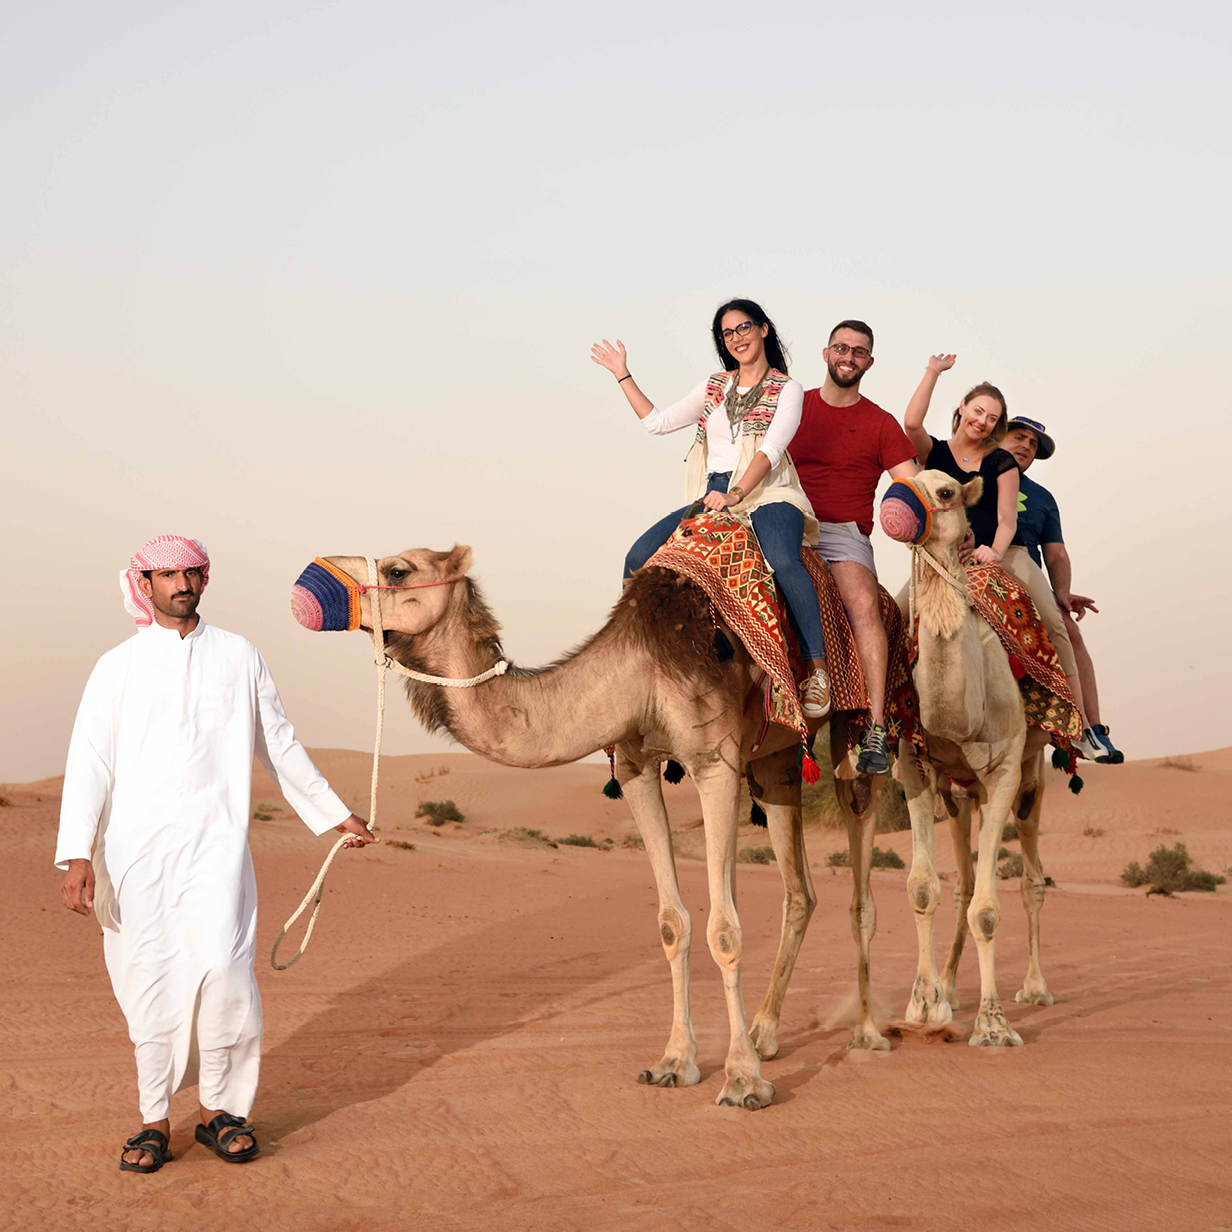 Morning Desert Adventure in Dubai - Private Vehicle, , large